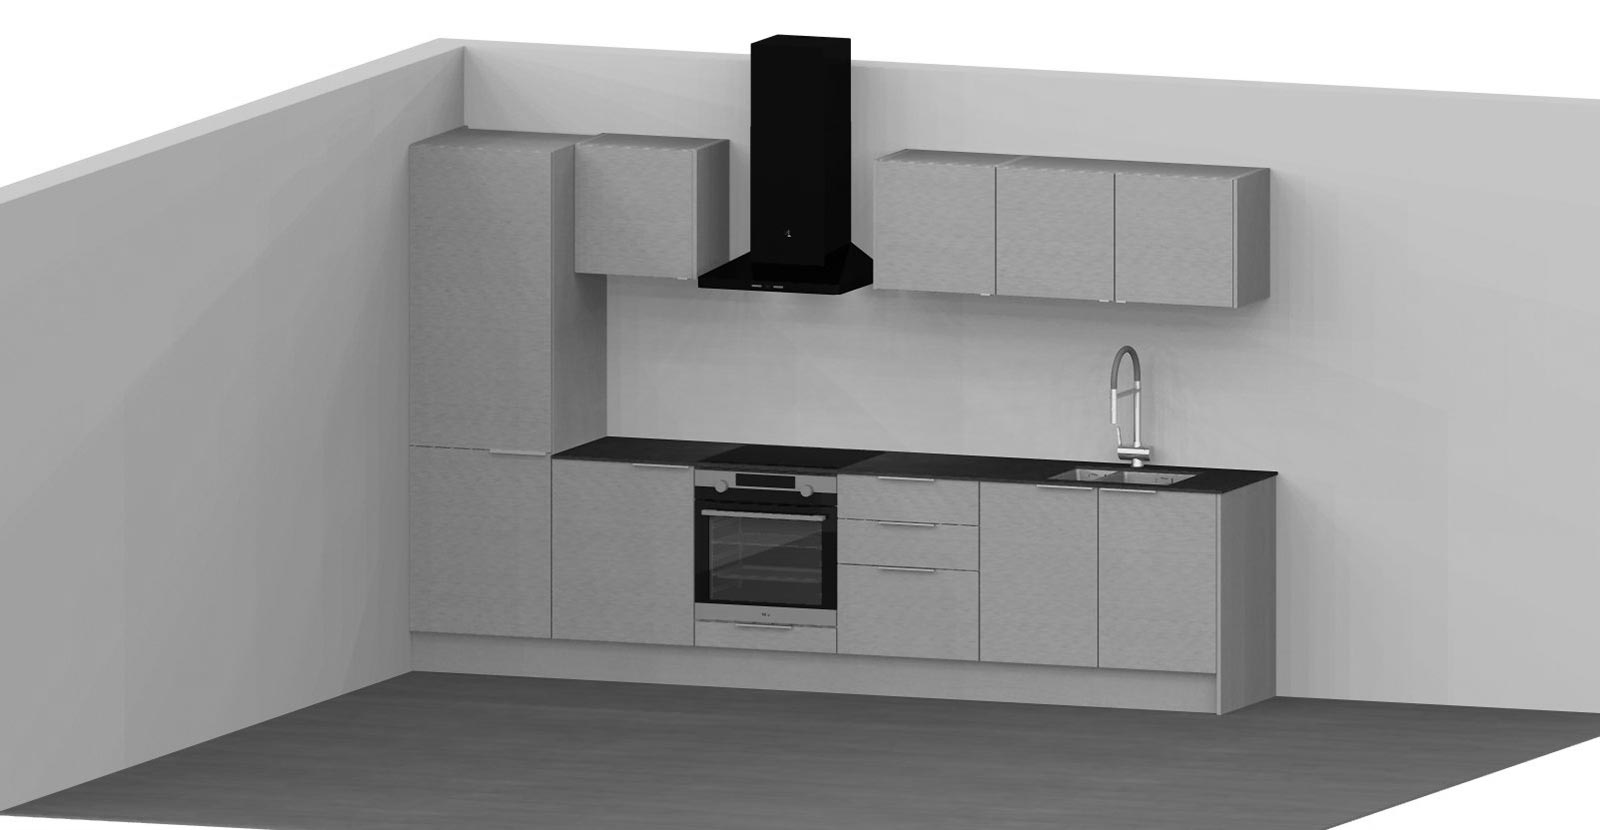 Default small miinus kitchen - black and white render